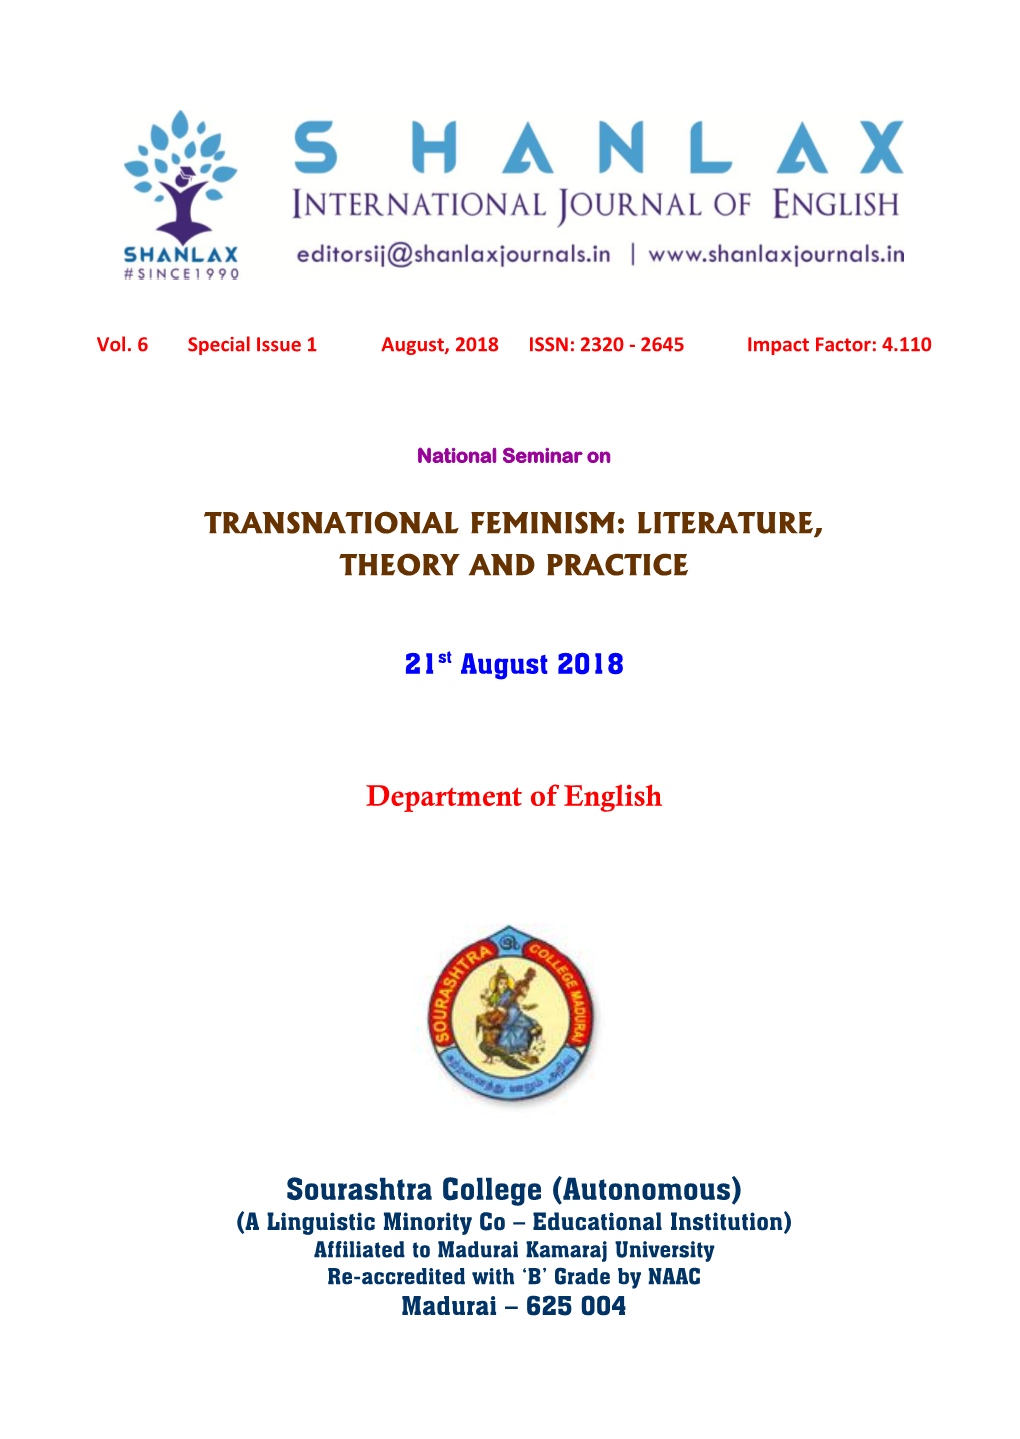 Department of English Sourashtra College, Madurai